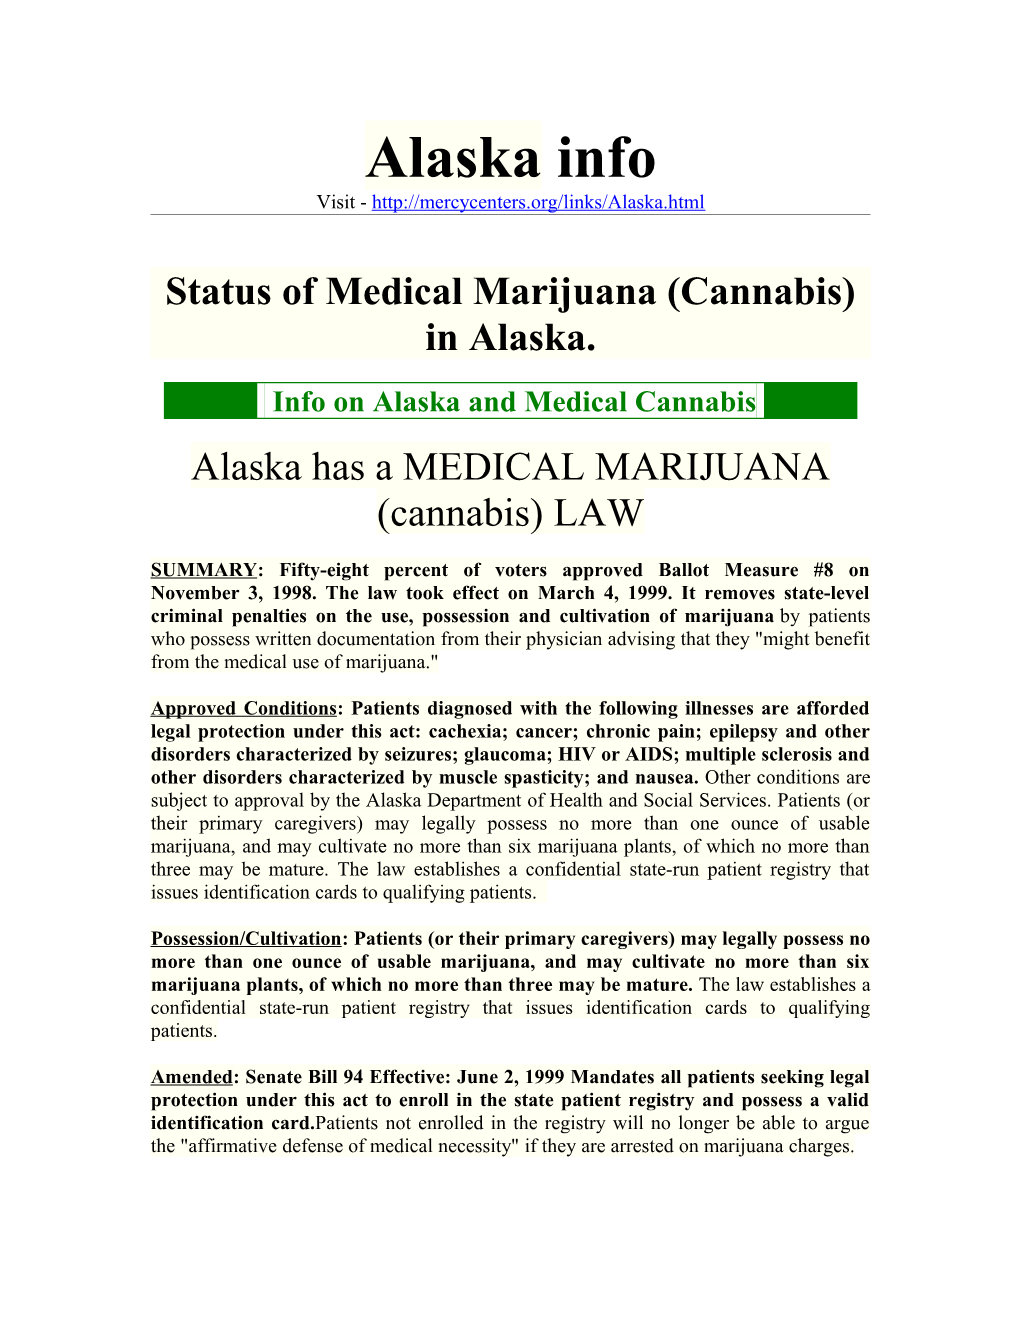 Status of Medical Marijuana (Cannabis) in Alaska